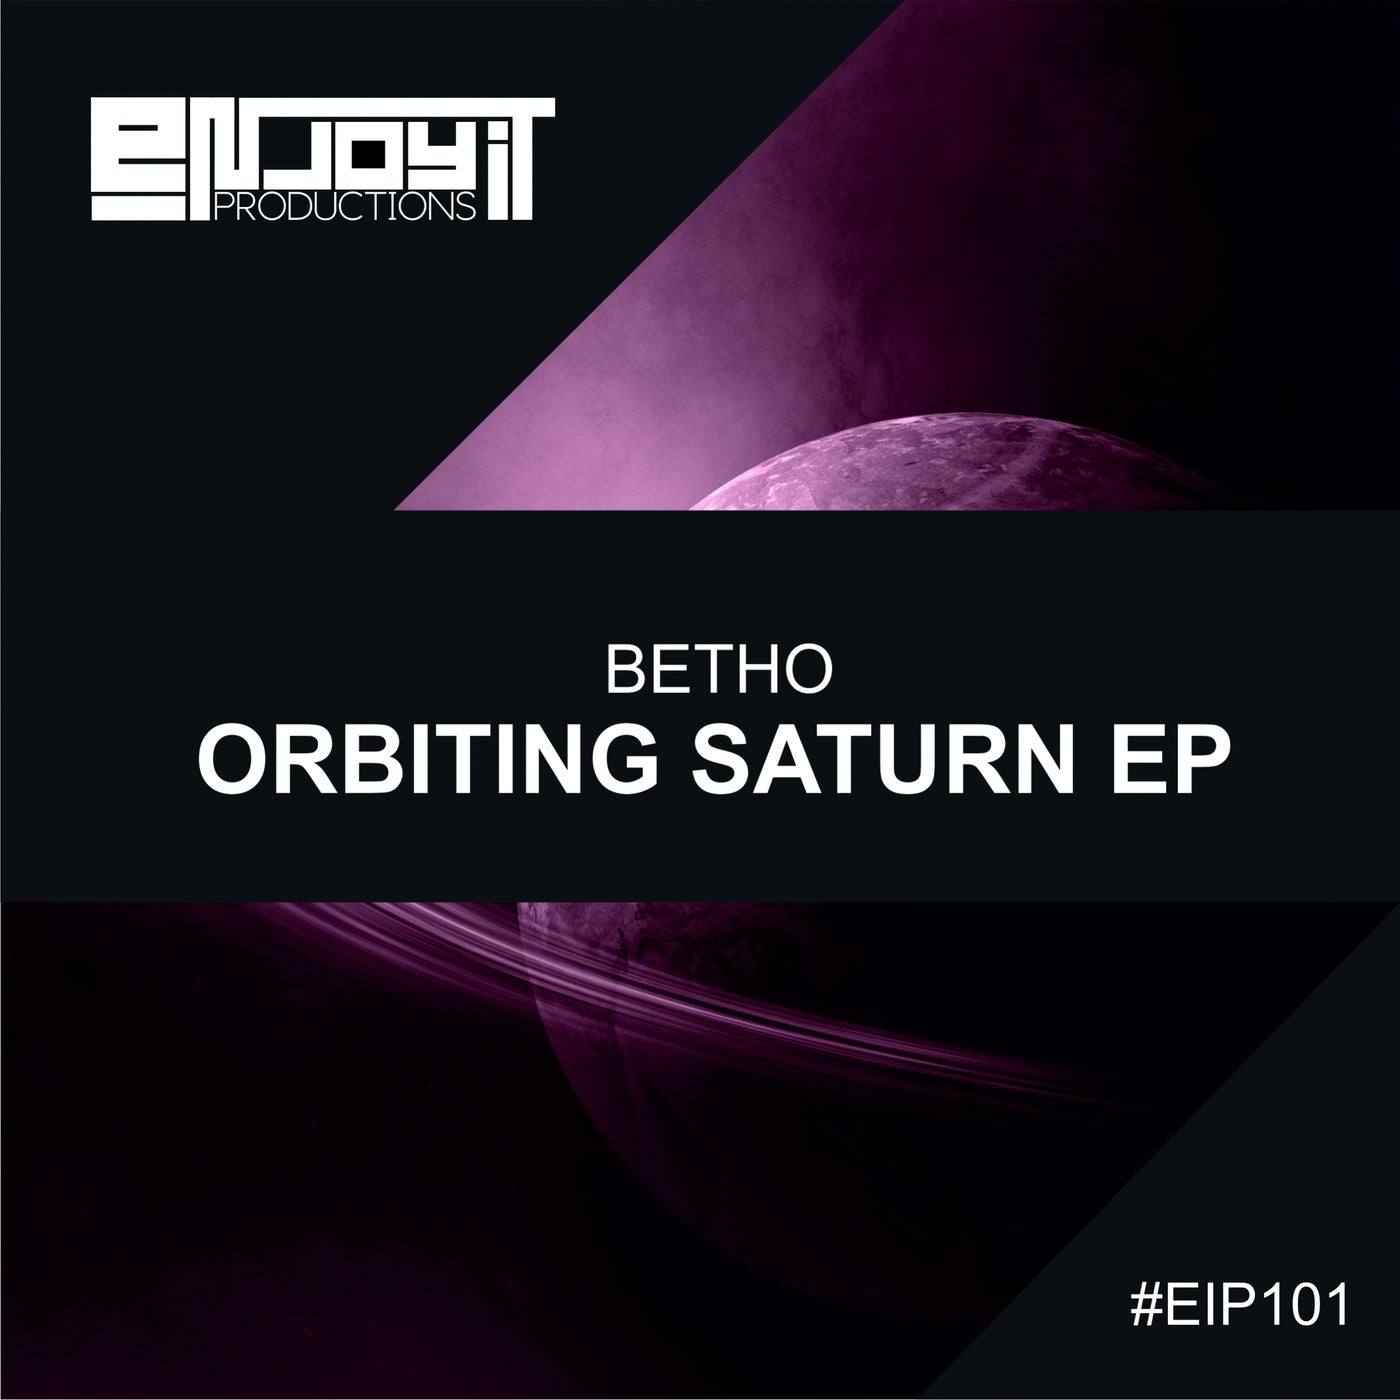 Orbiting Saturn EP